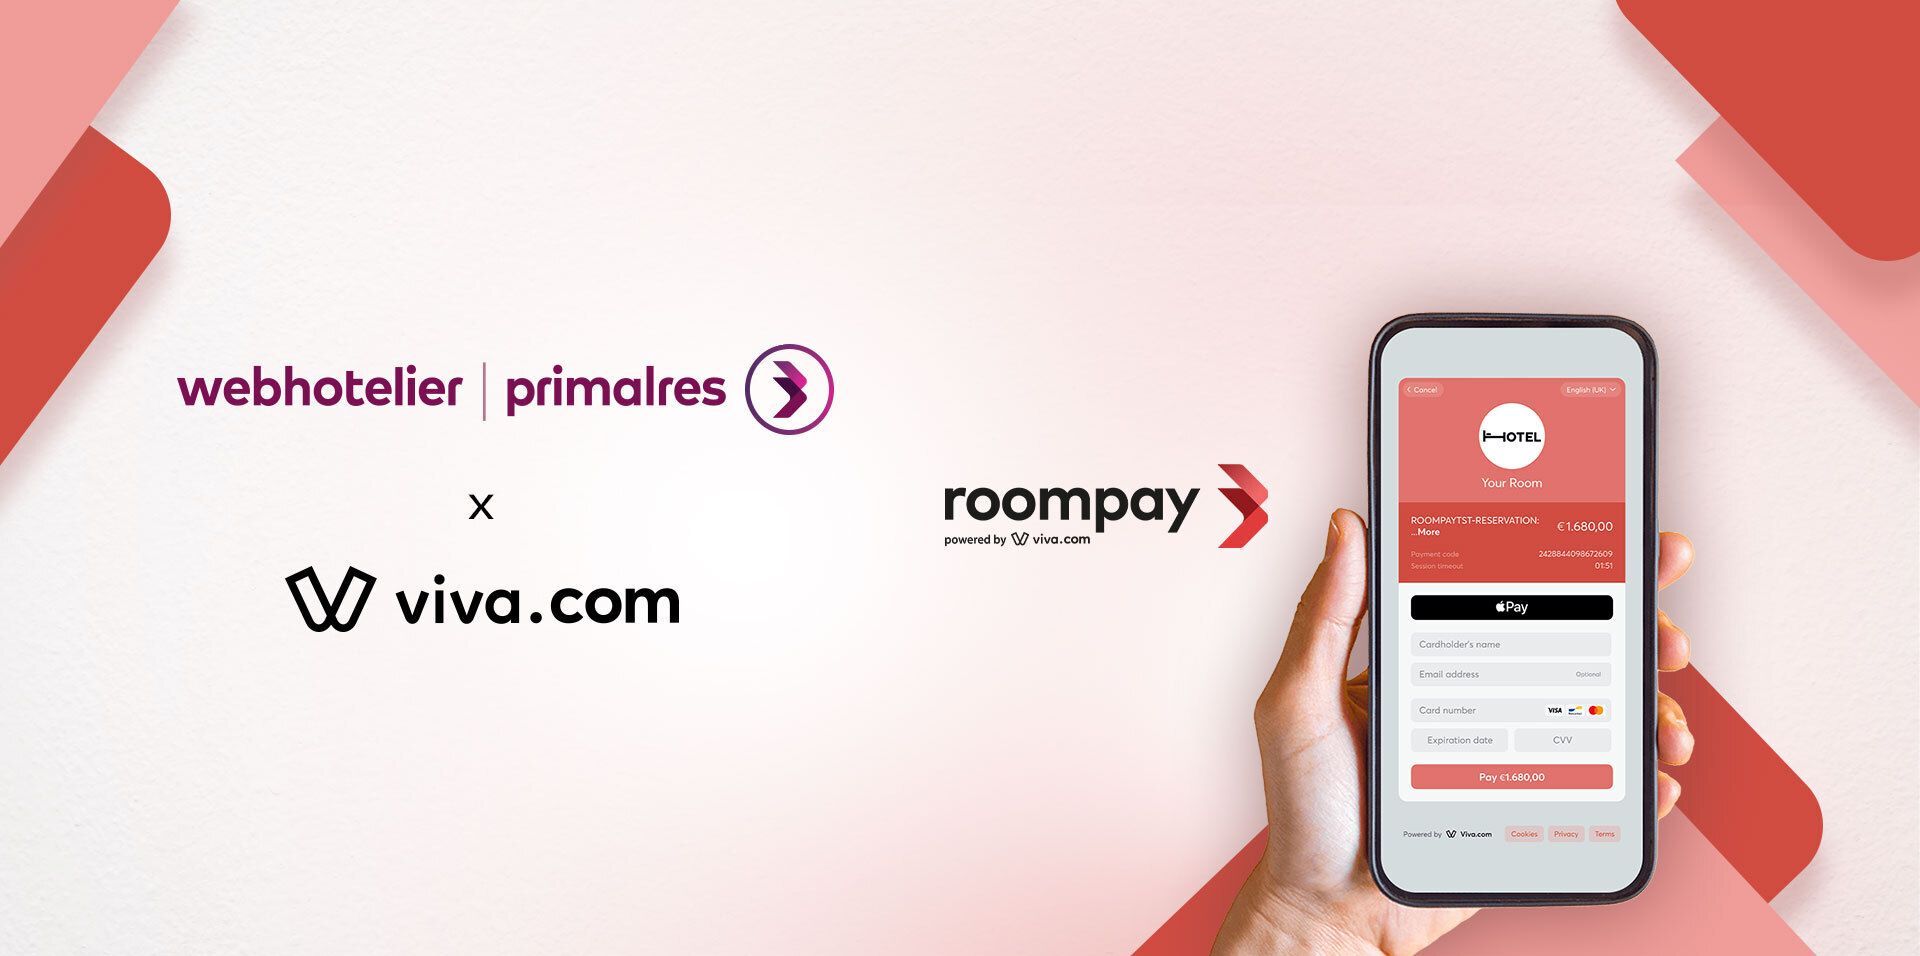 webhotelier | primalres: Δημιουργεί το roompay, το πιο σύγχρονο σύστημα διαχείρισης 
συναλλαγών και πληρωμών σε συνεργασία με τη Viva.com